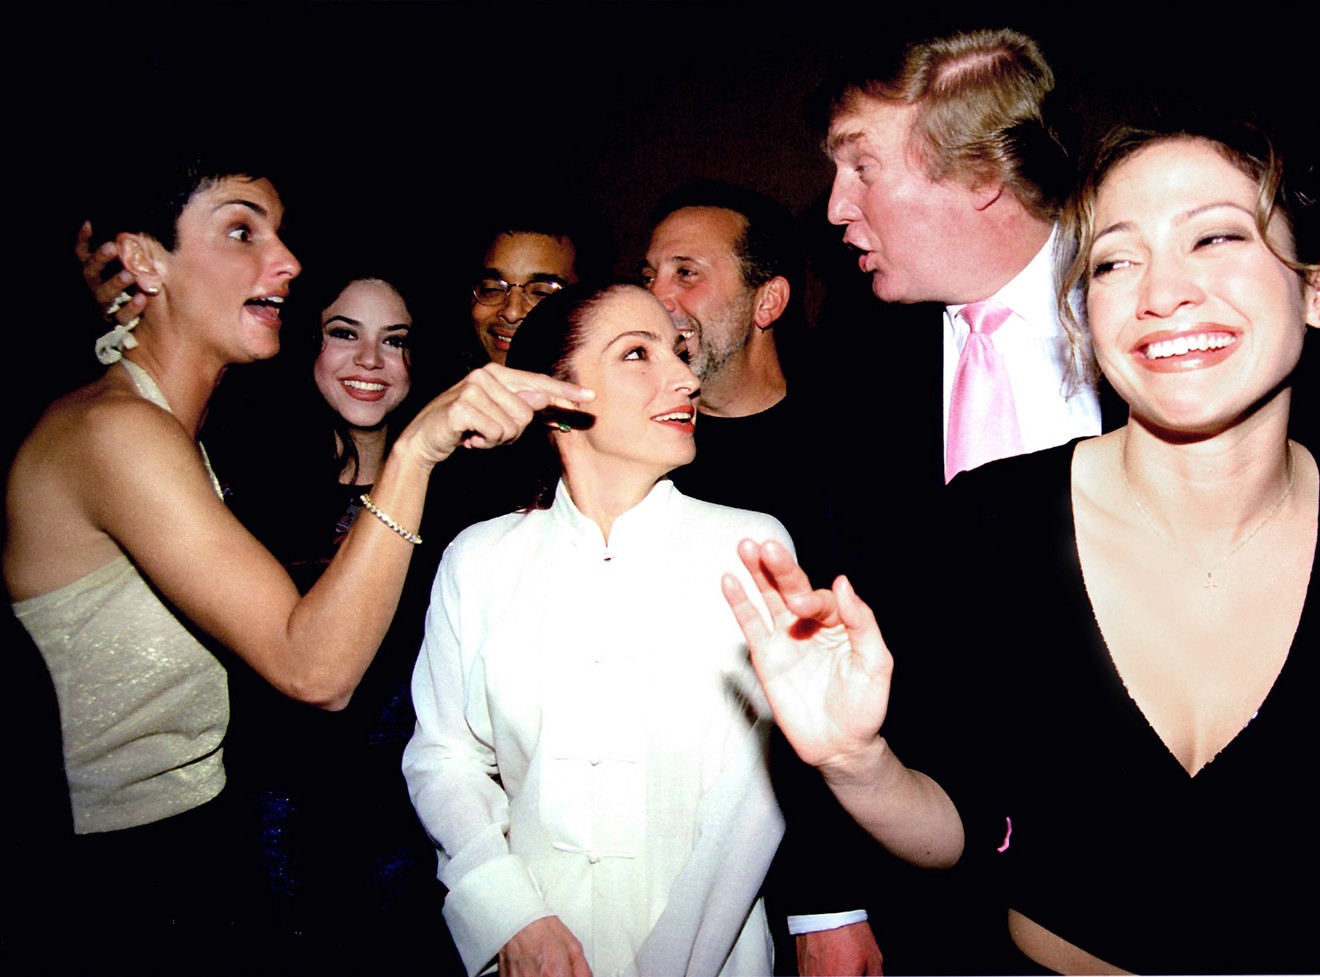 Ingrid Caseres (left), Shakira, Jon Secada, Gloria and Emilio Estefan, Donald Trump, and Jennifer Lopez in Miami. View more of Manny Hernandez's photos here.